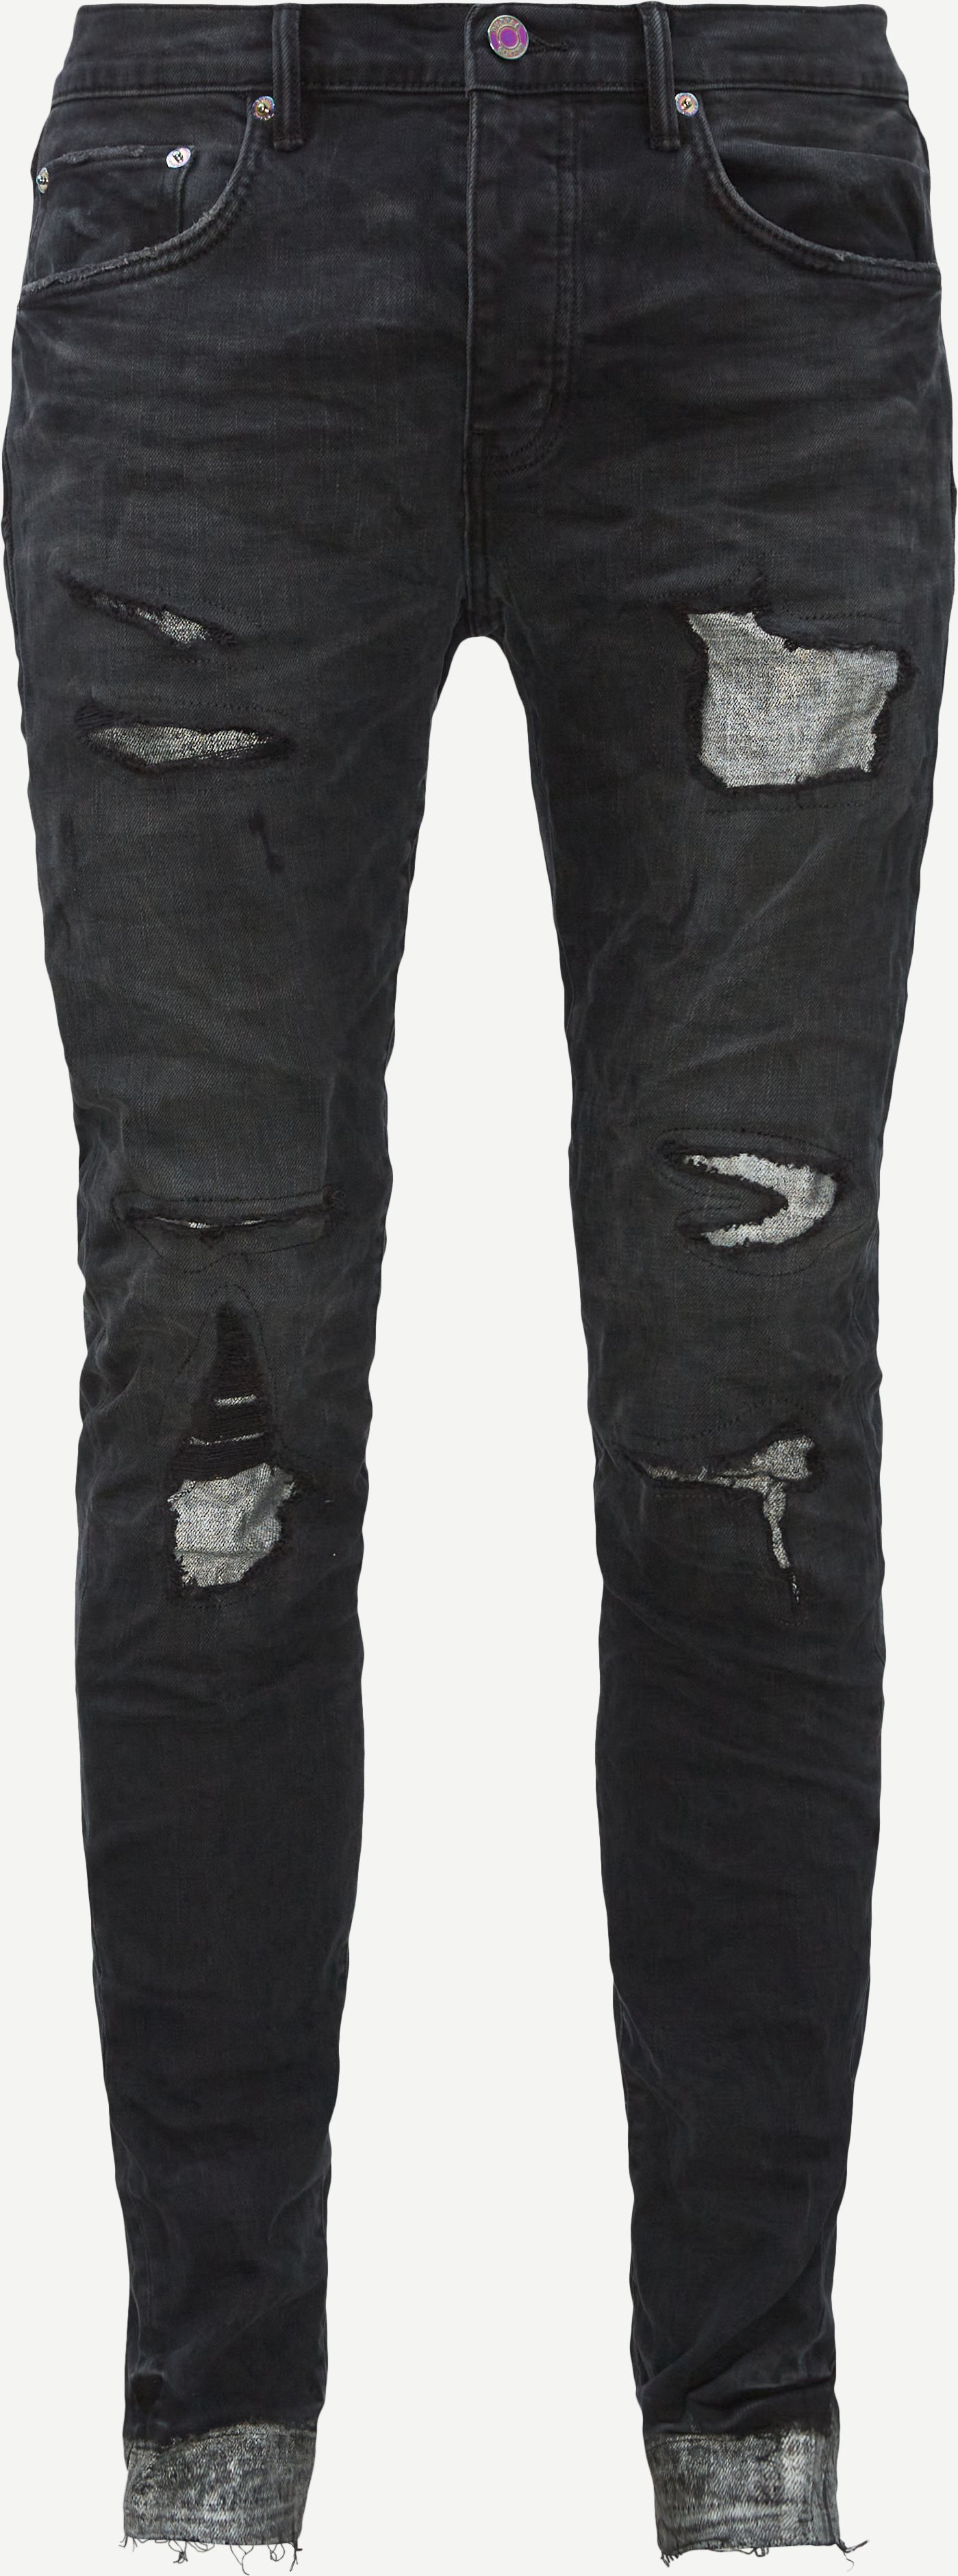 PURPLE Jeans P001-BVHR422 Denim